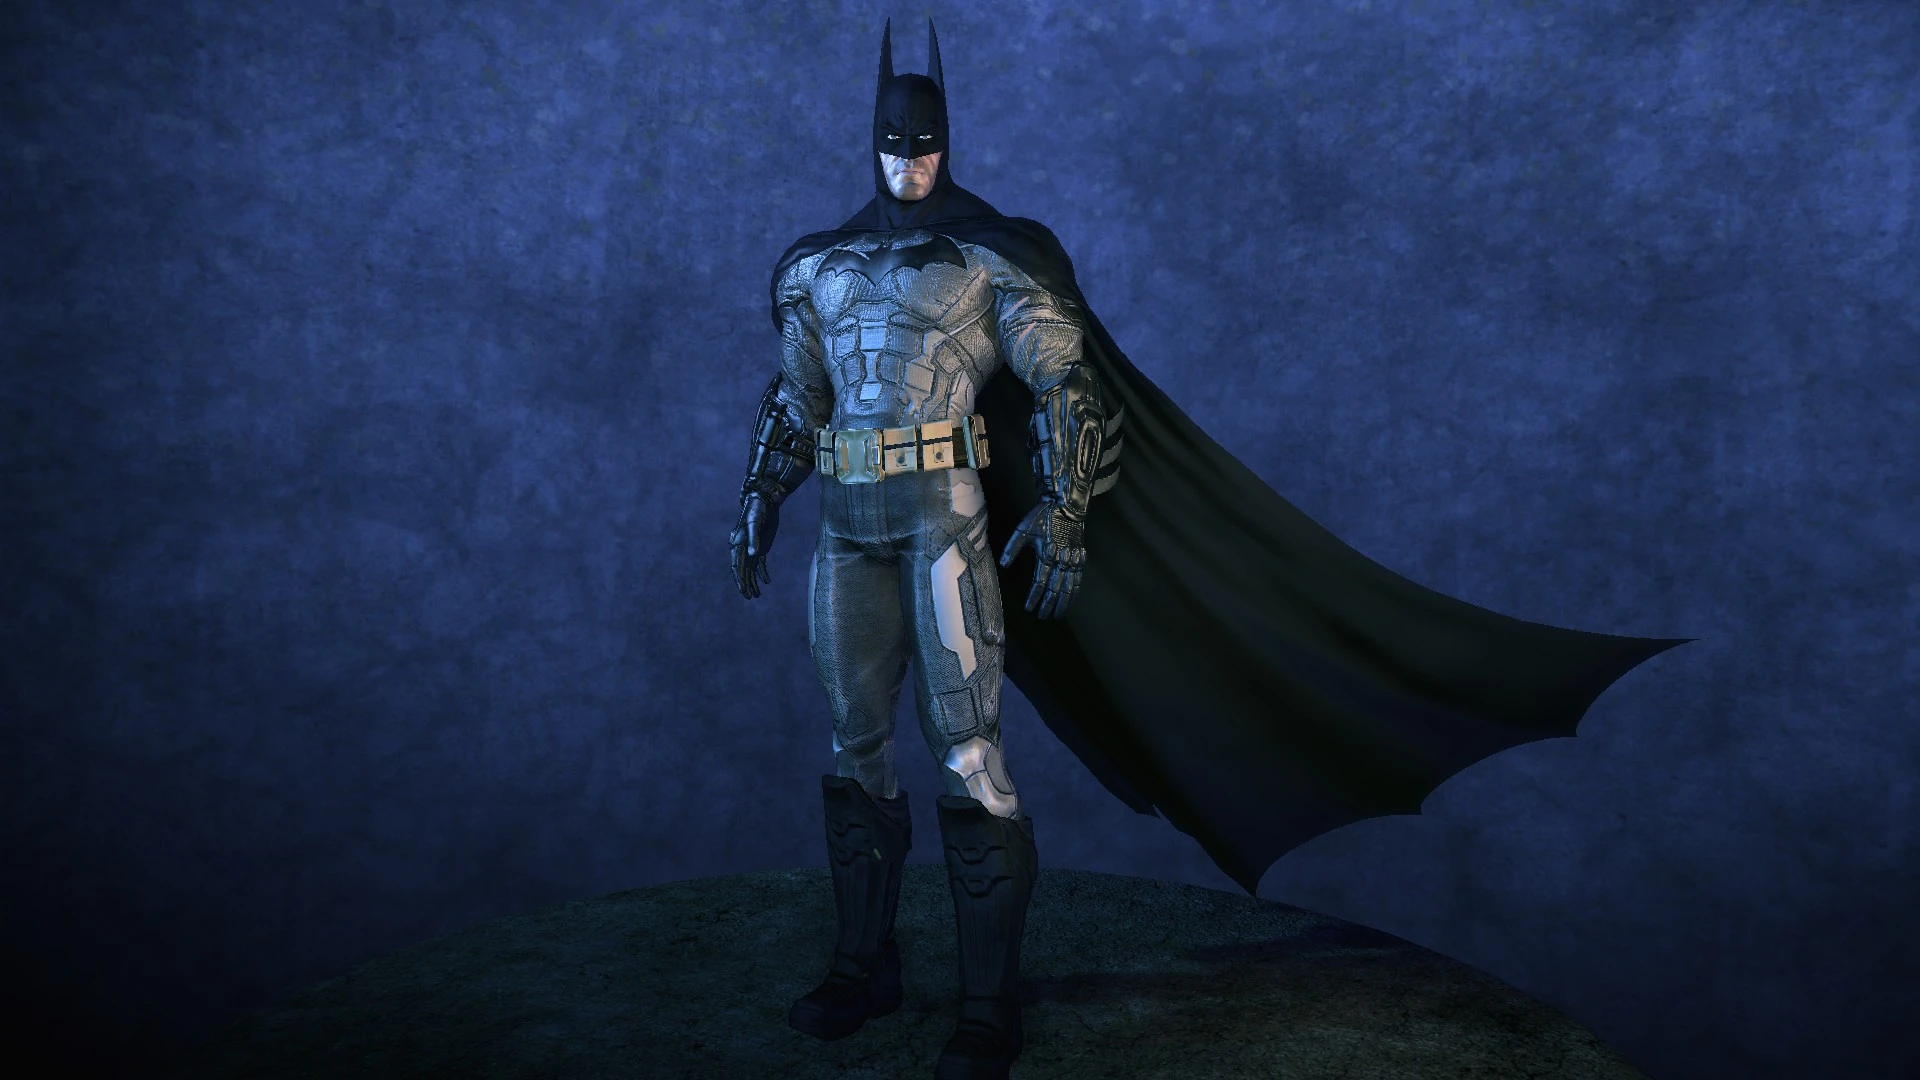 Batman origins костюмы. Batman Arkham Asylum костюмы. Костюмы Бэтмена Arkham City. Бэтмен Аркхем Сити костюмы. Batman Arkham Asylum Batman.